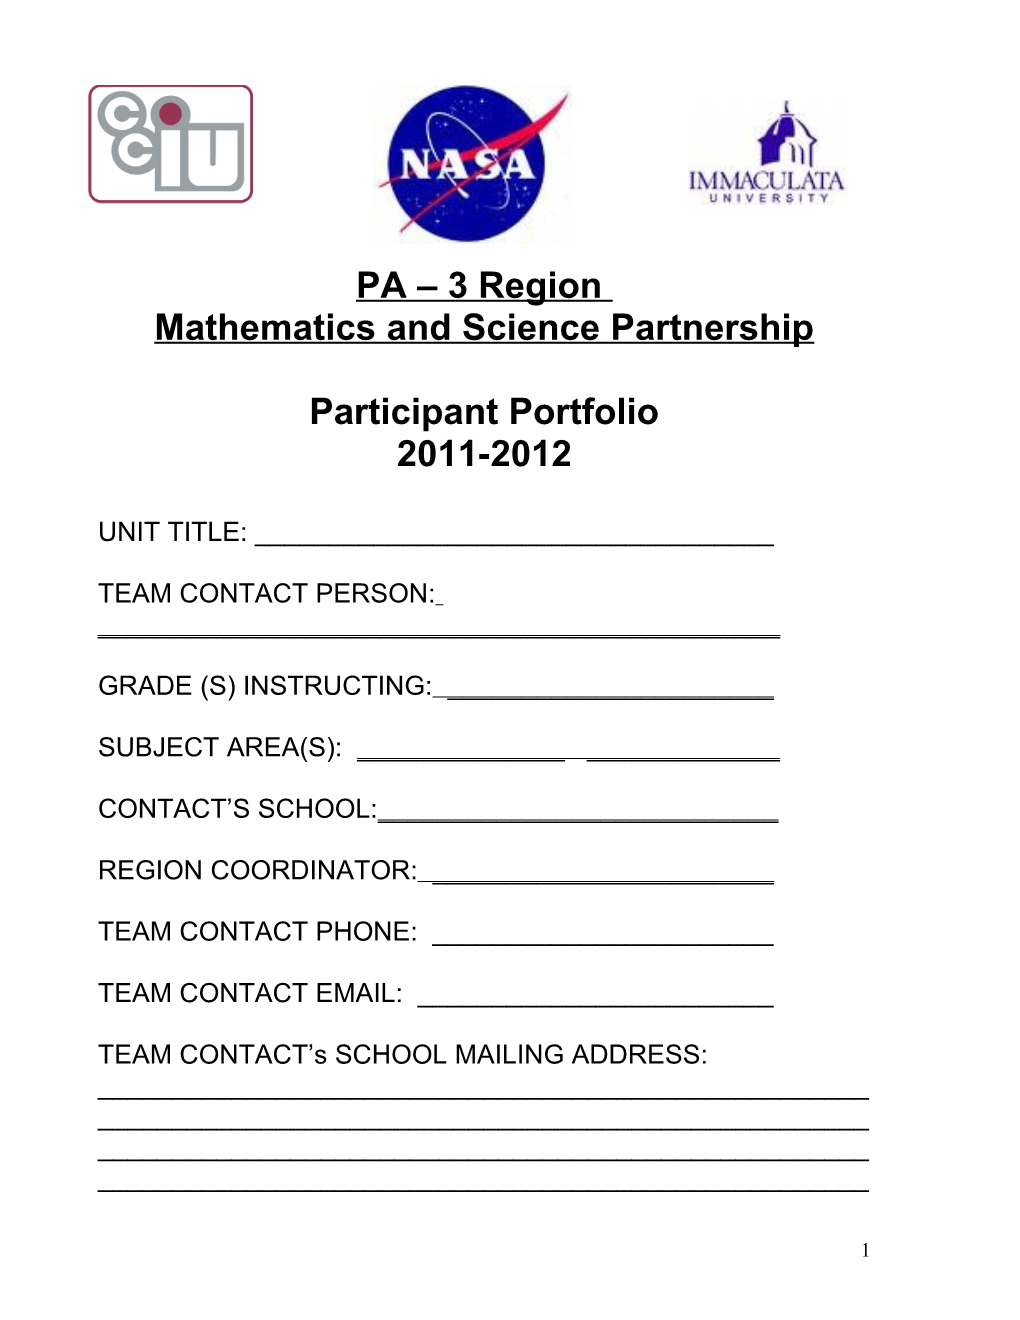 Mathematics and Science Partnership